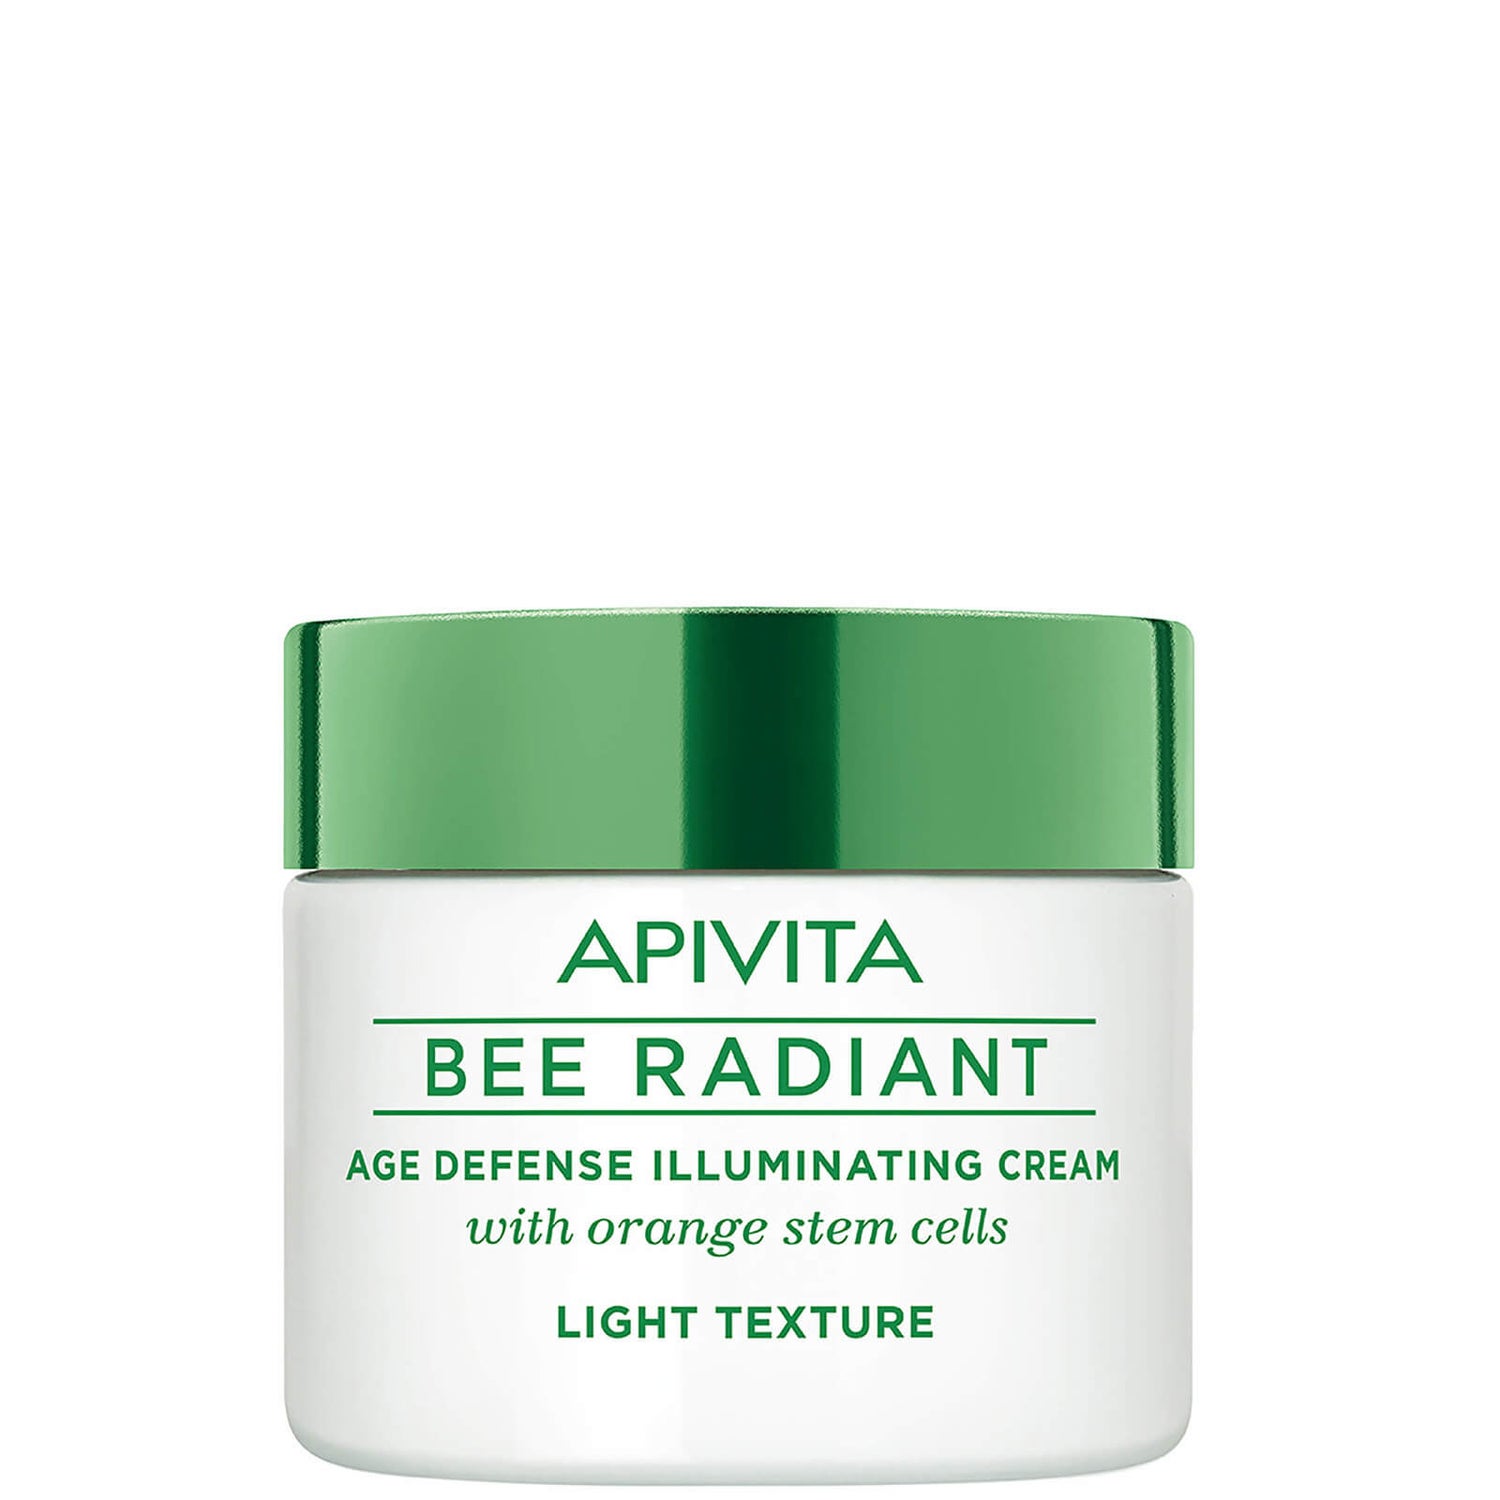 APIVITA Bee Radiant Age Defense Illuminating Cream - Light Texture 50ml